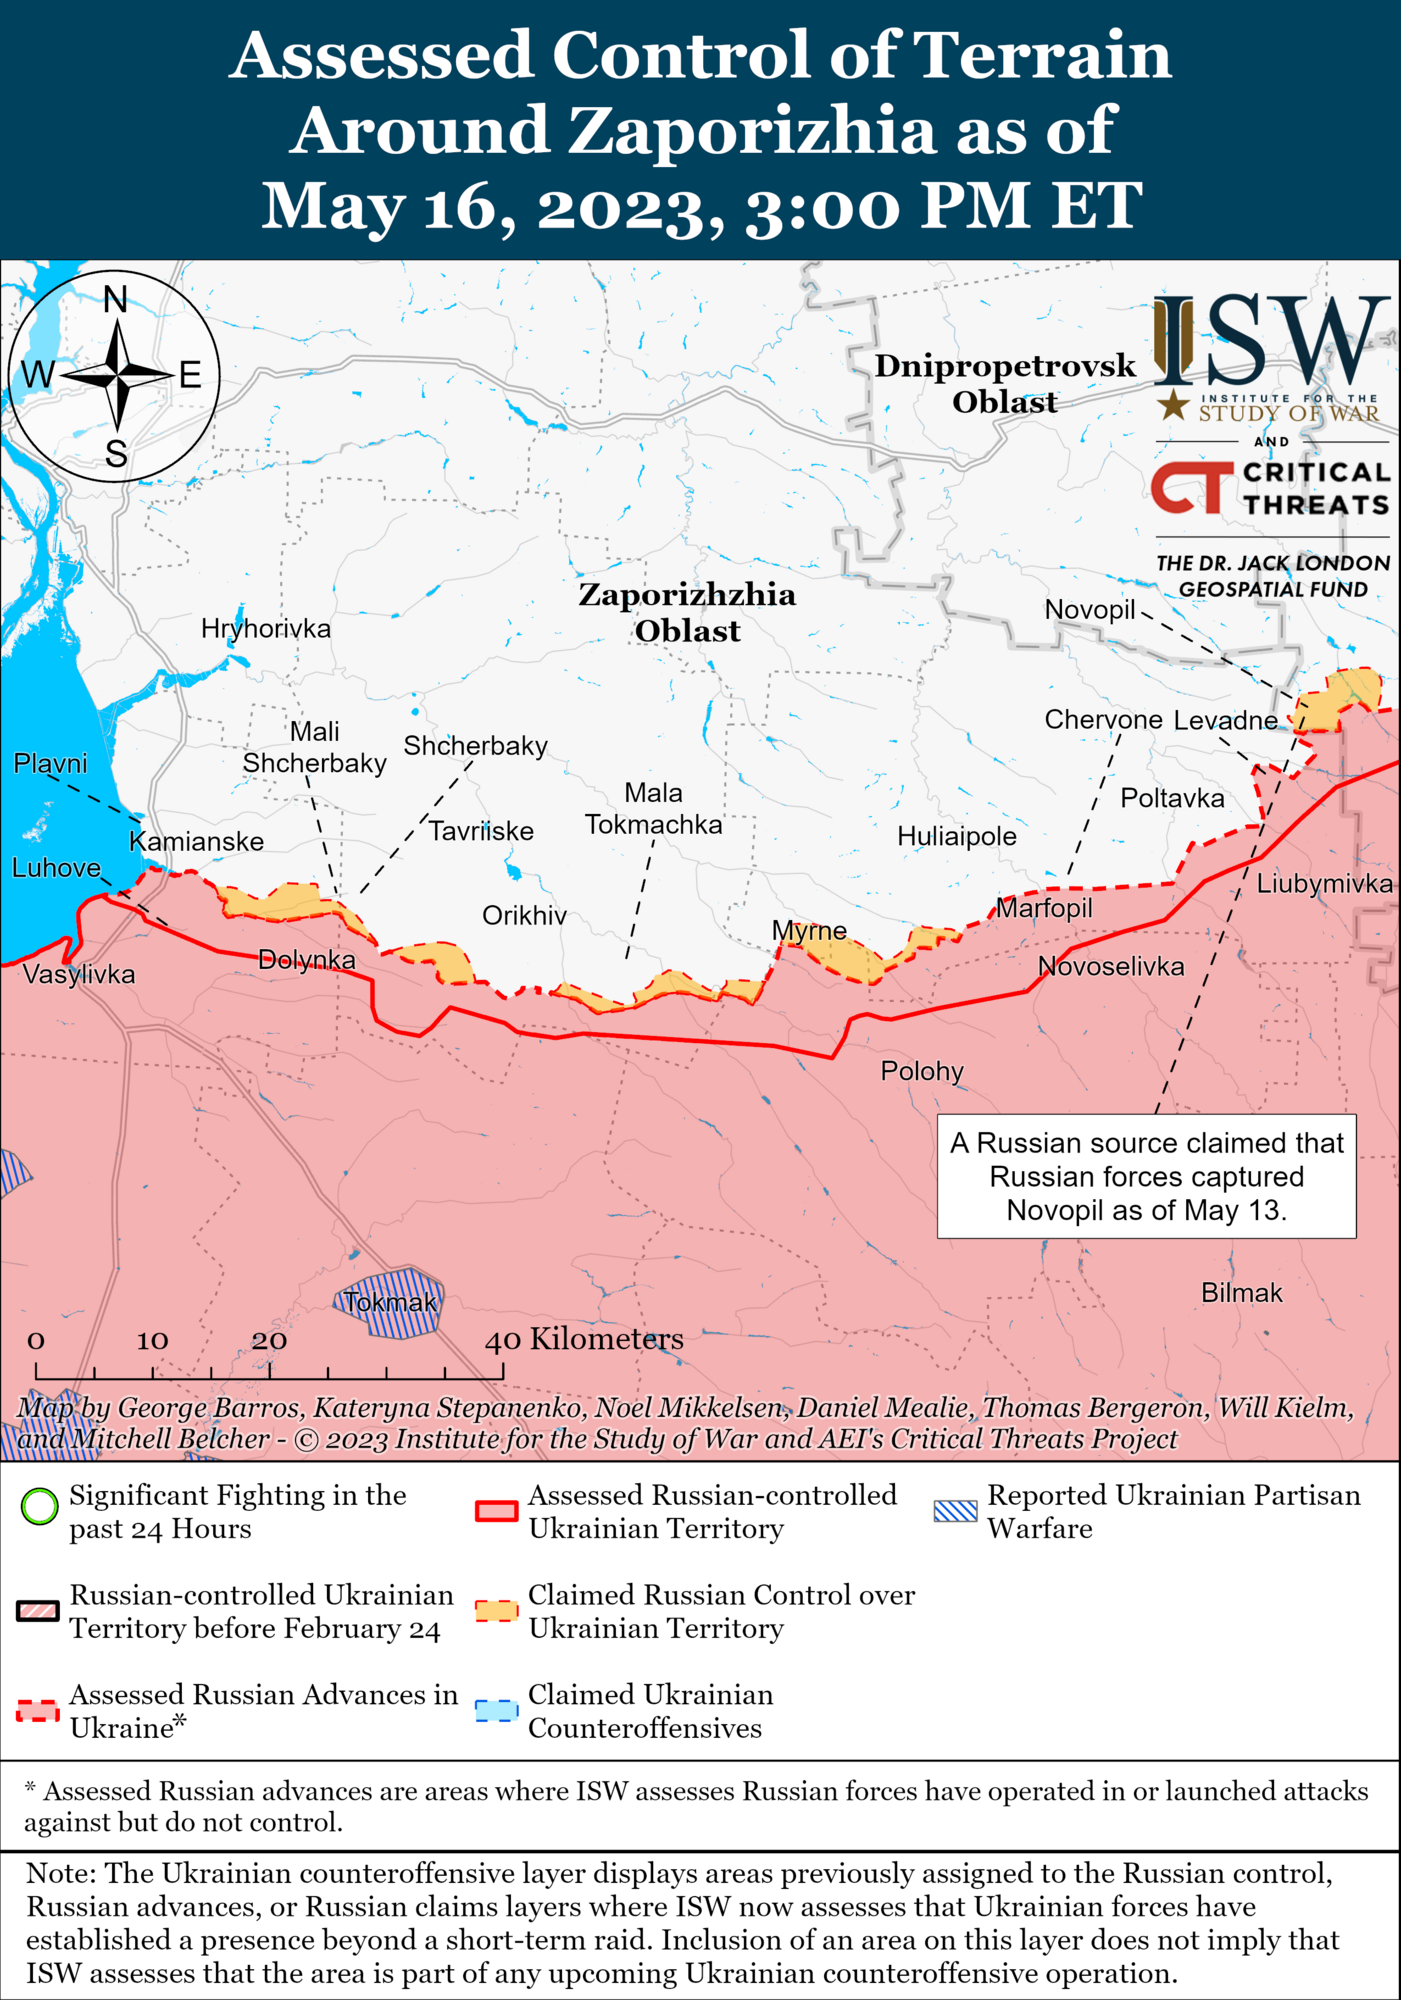 Hostilities in the Zaporizhzhia region